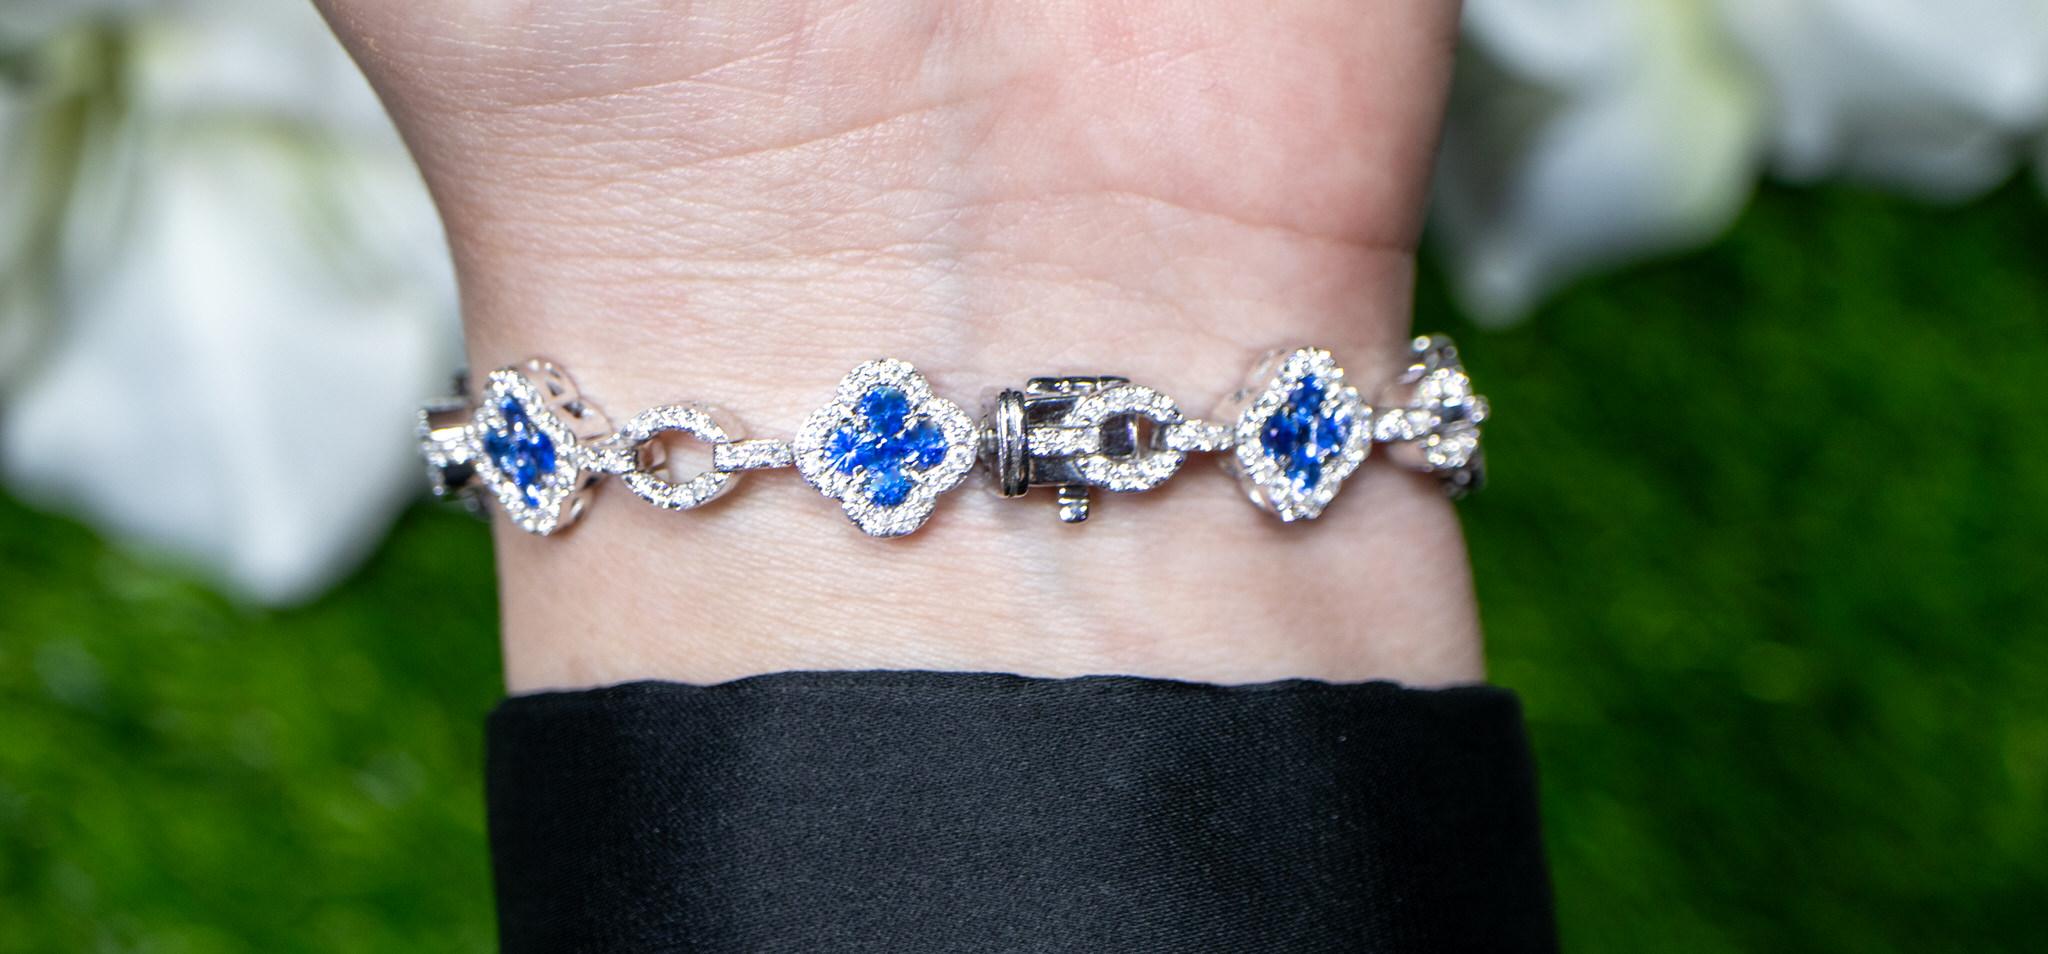 Clover Sapphire Bracelet Diamond Links 5.38 Carats 18K White Gold For Sale 1